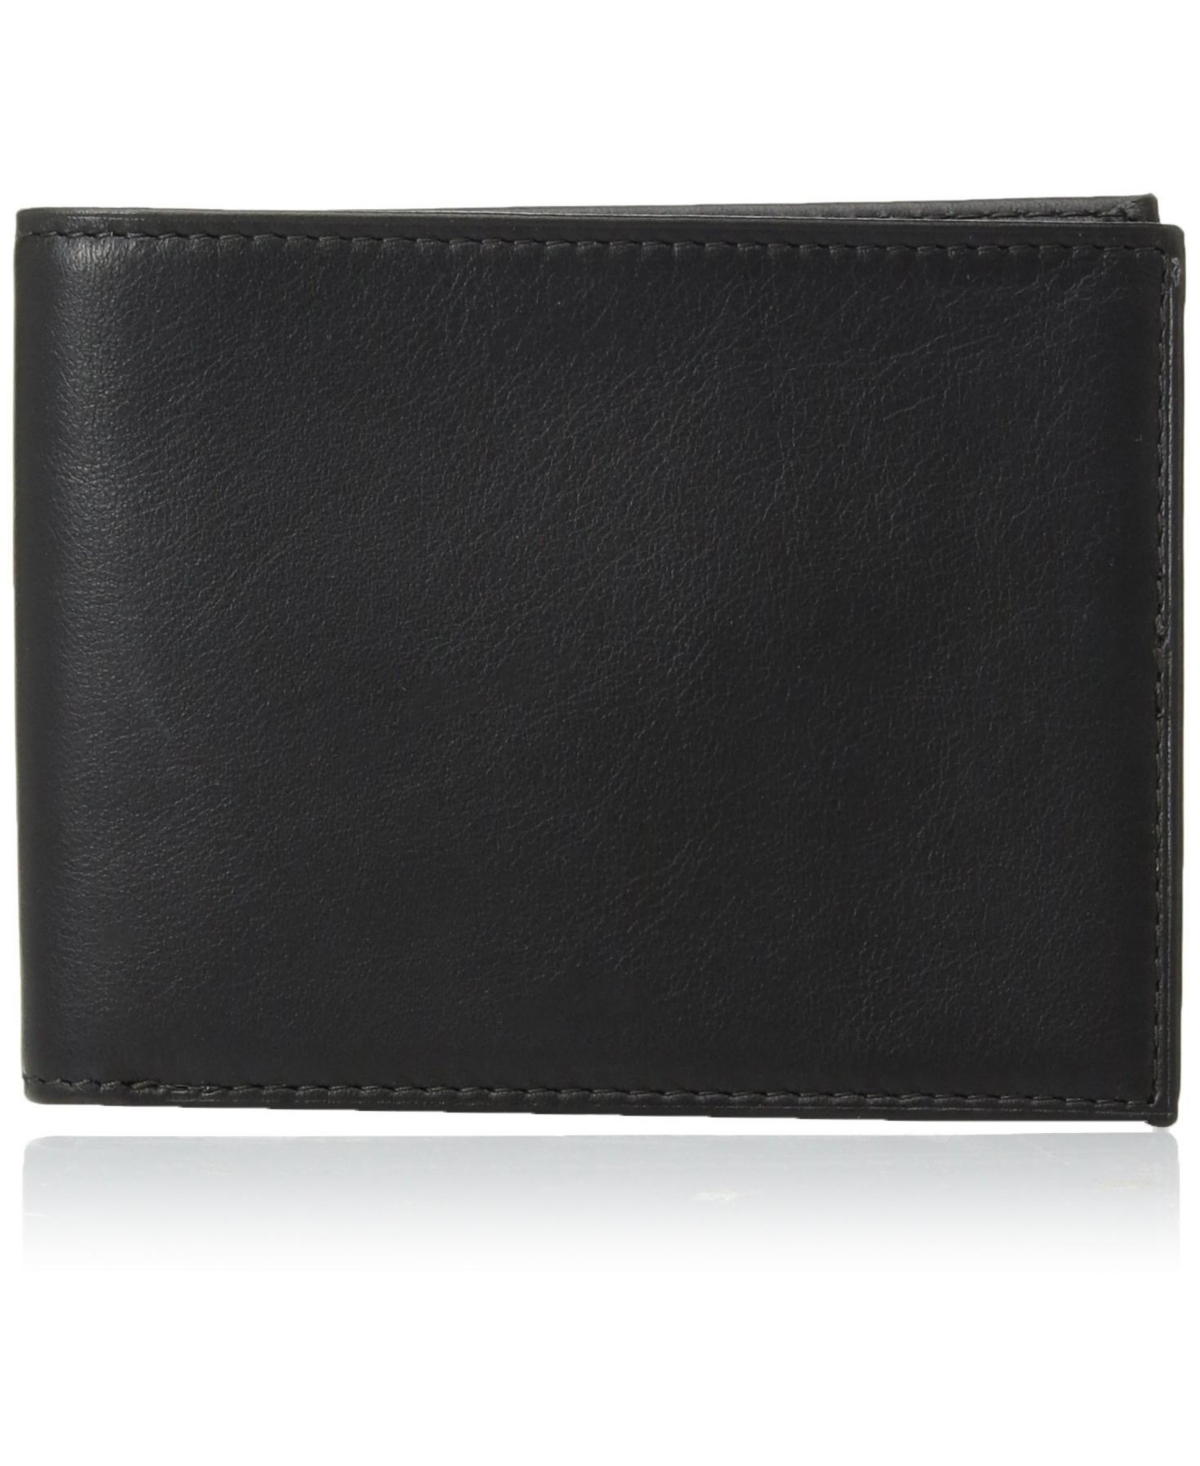 Men's Wallet, Nappa Vitello Leather Executive I.d. Wallet with Rfid Blocking - Black